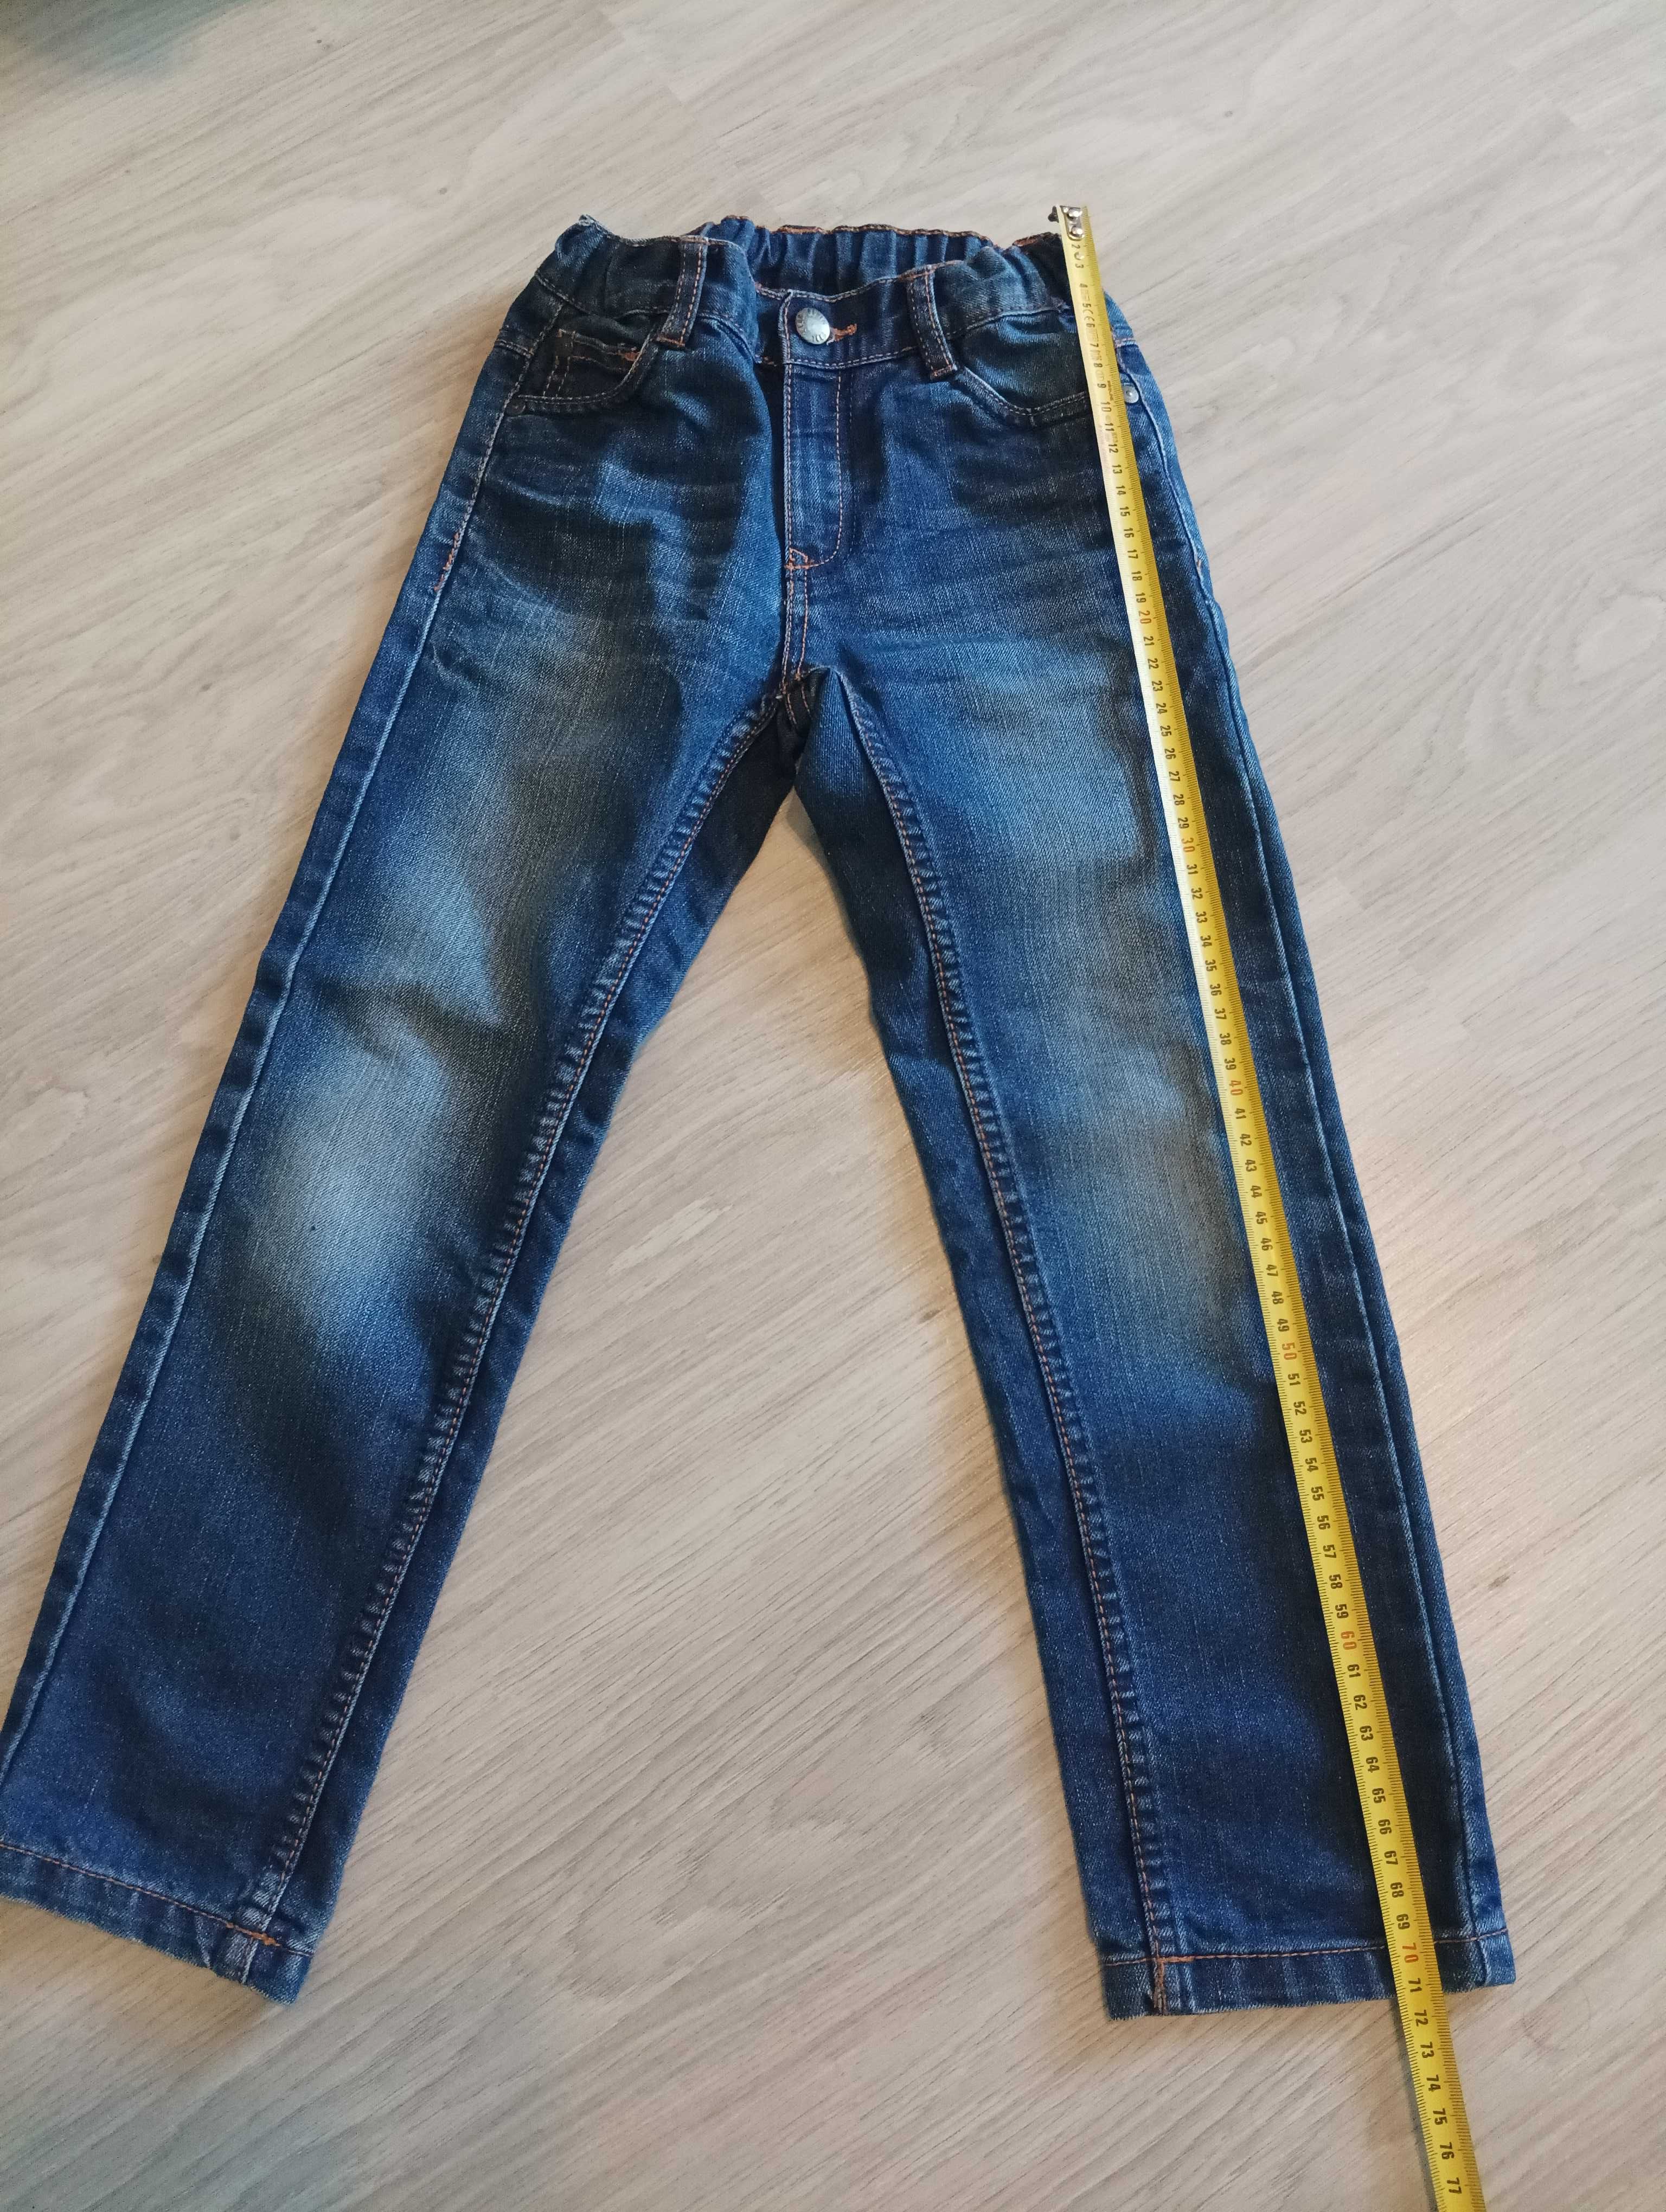 Spodnie jeansy cool club smyk rozmiar 122